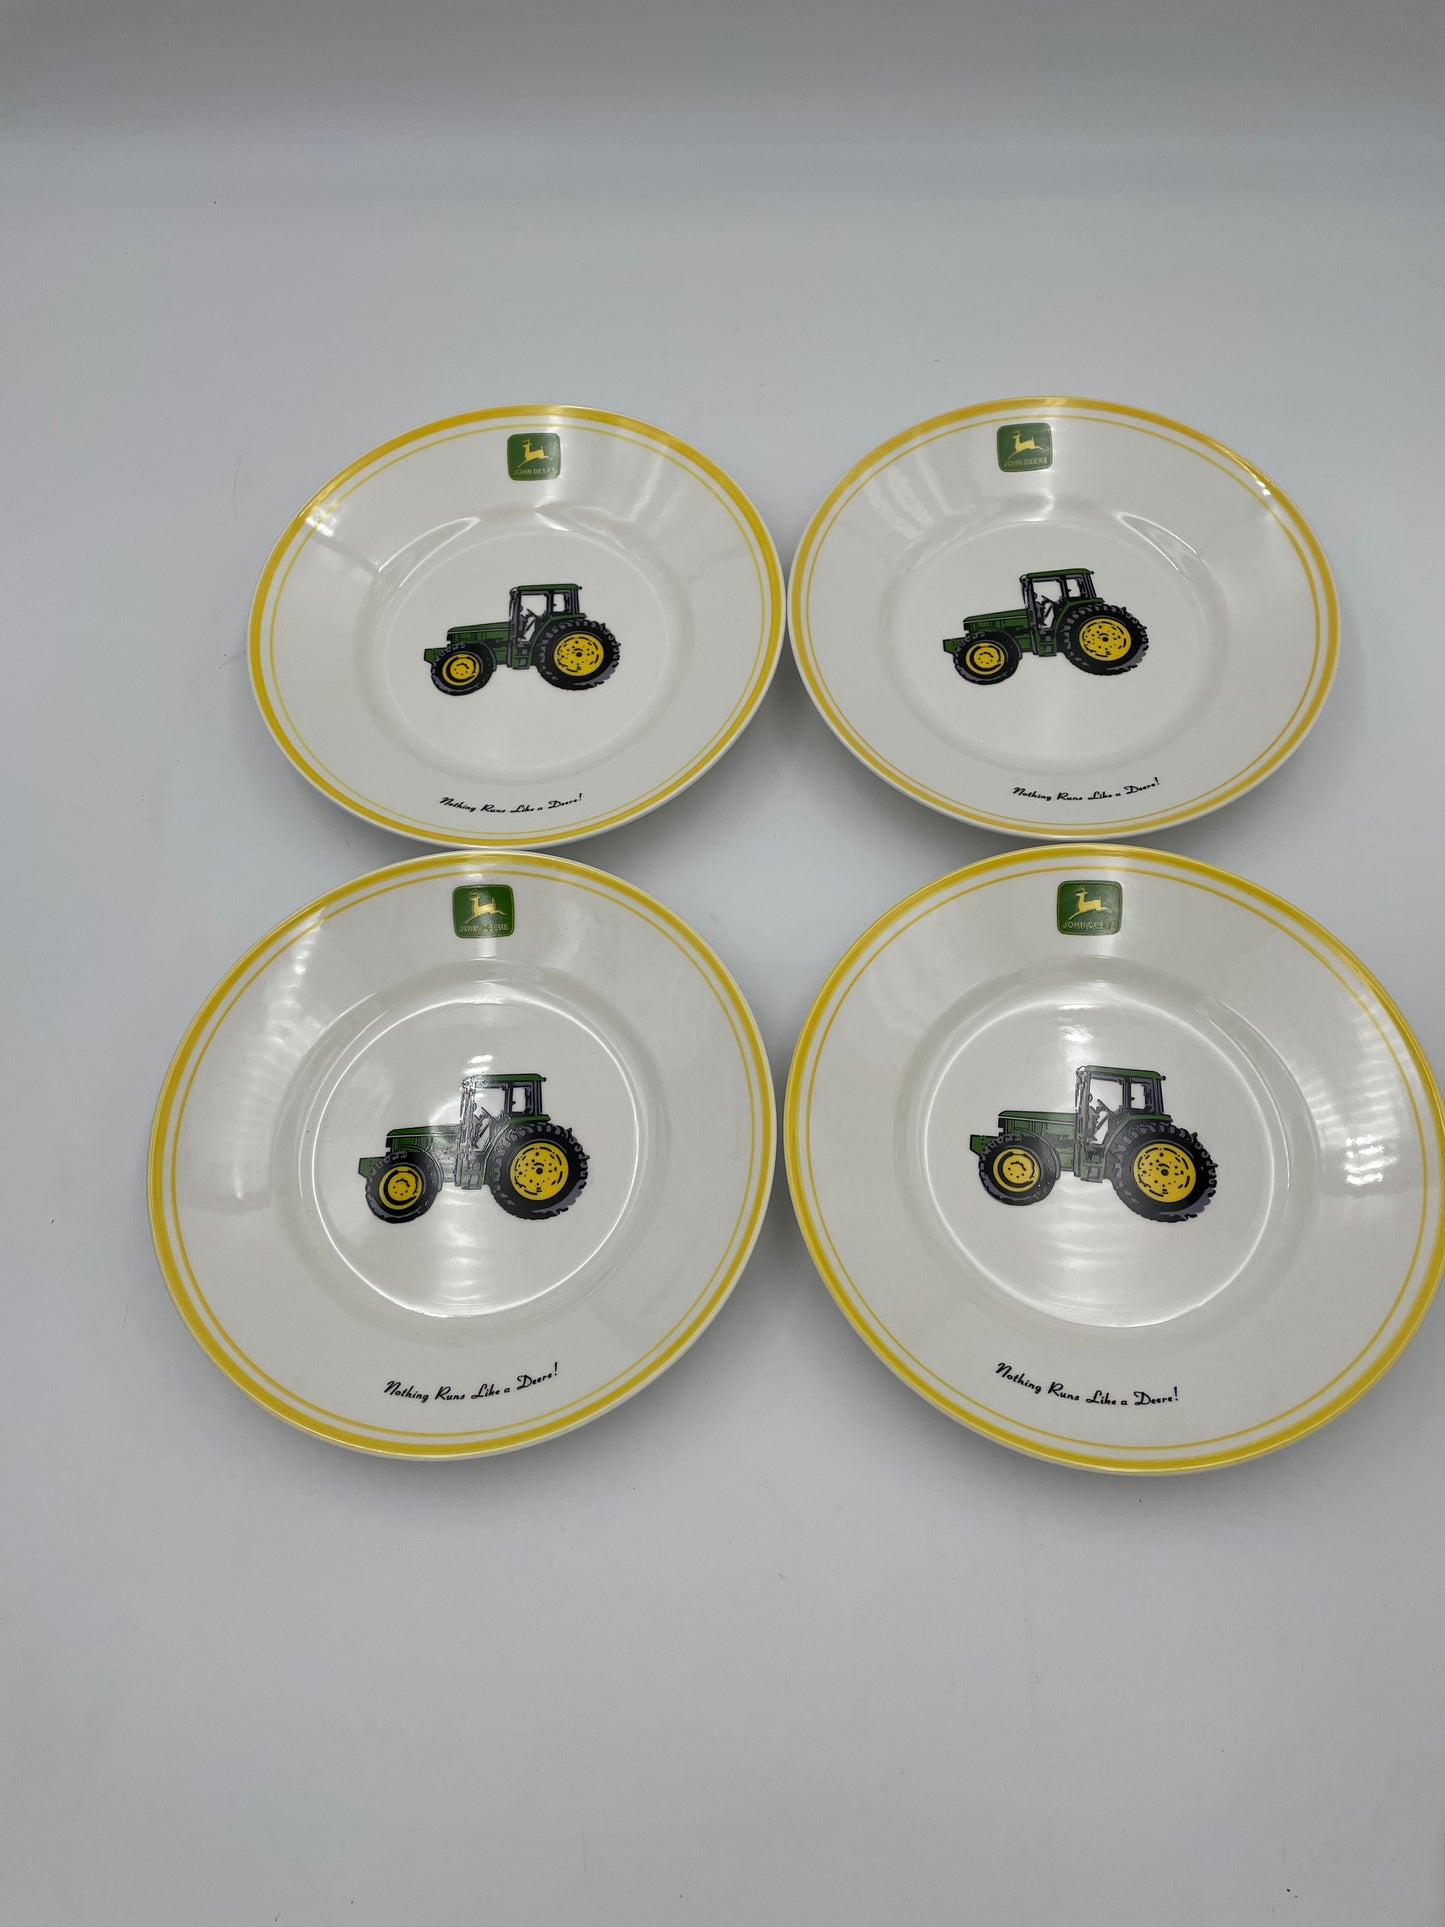 Collectible - John Deere Plates - set of 4 plates